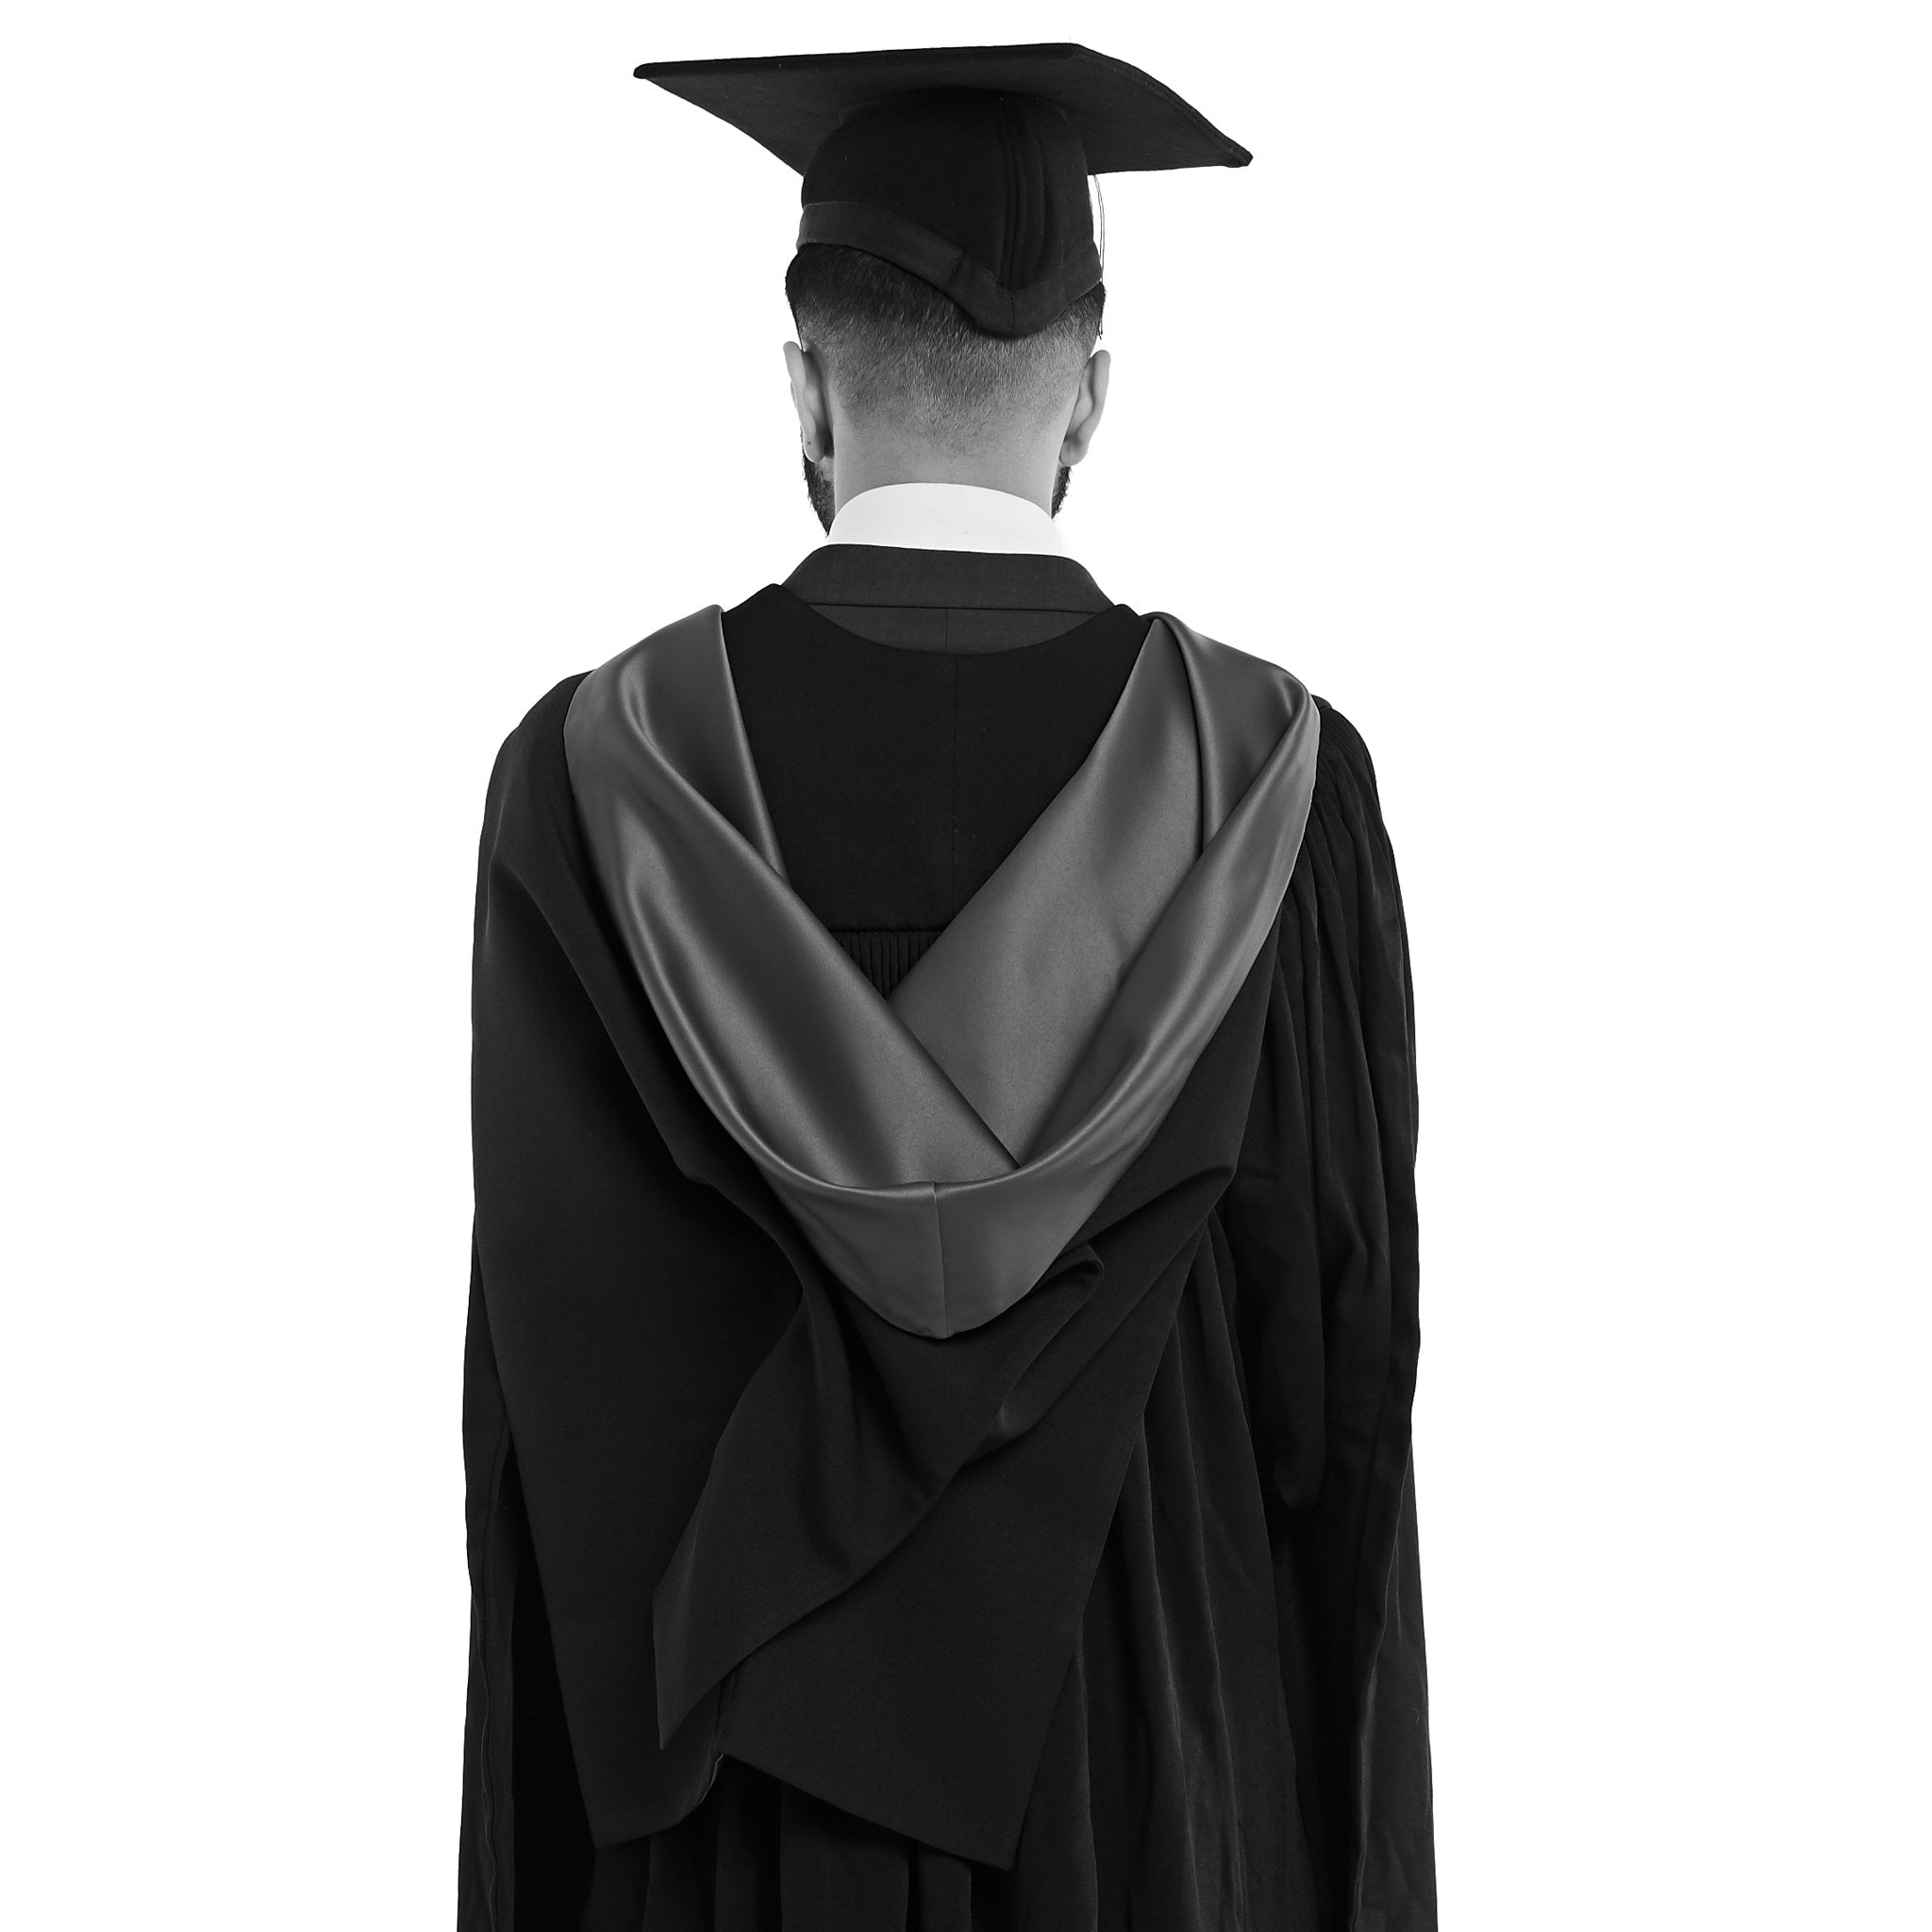 Graduation | Australian National University